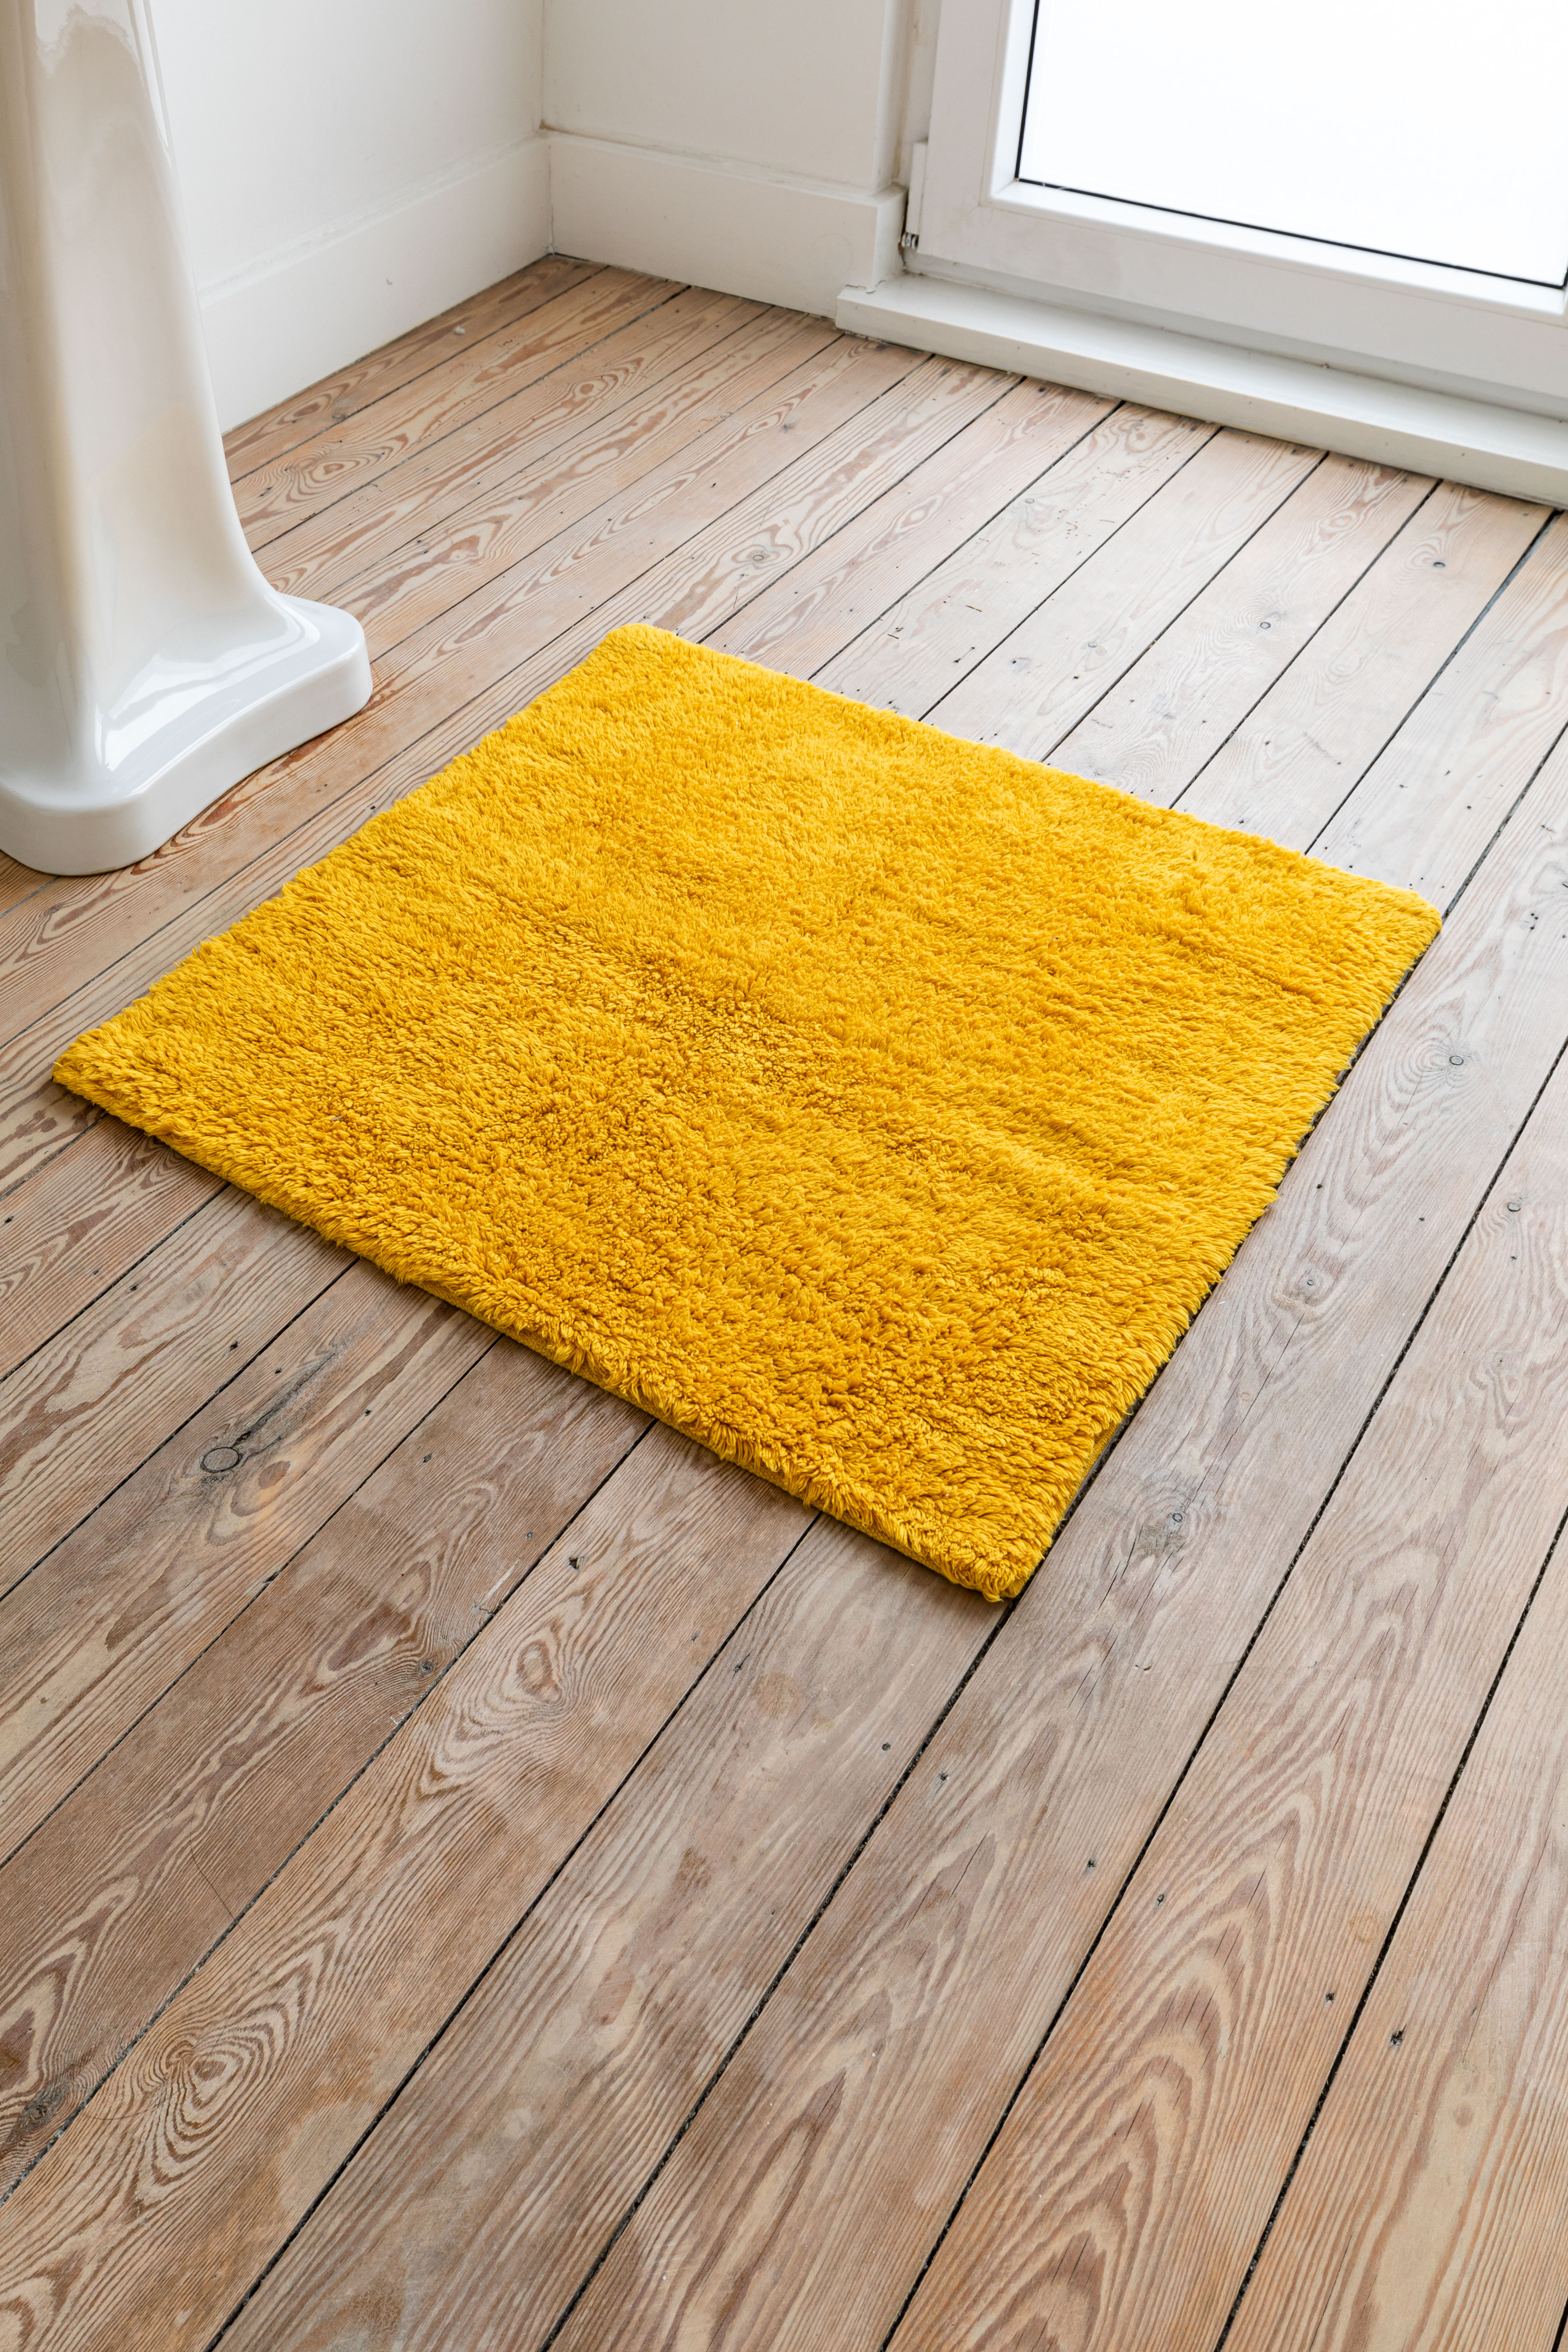 Bath carpet RIVA - cotton anti-slip, 60x60cm, mauve